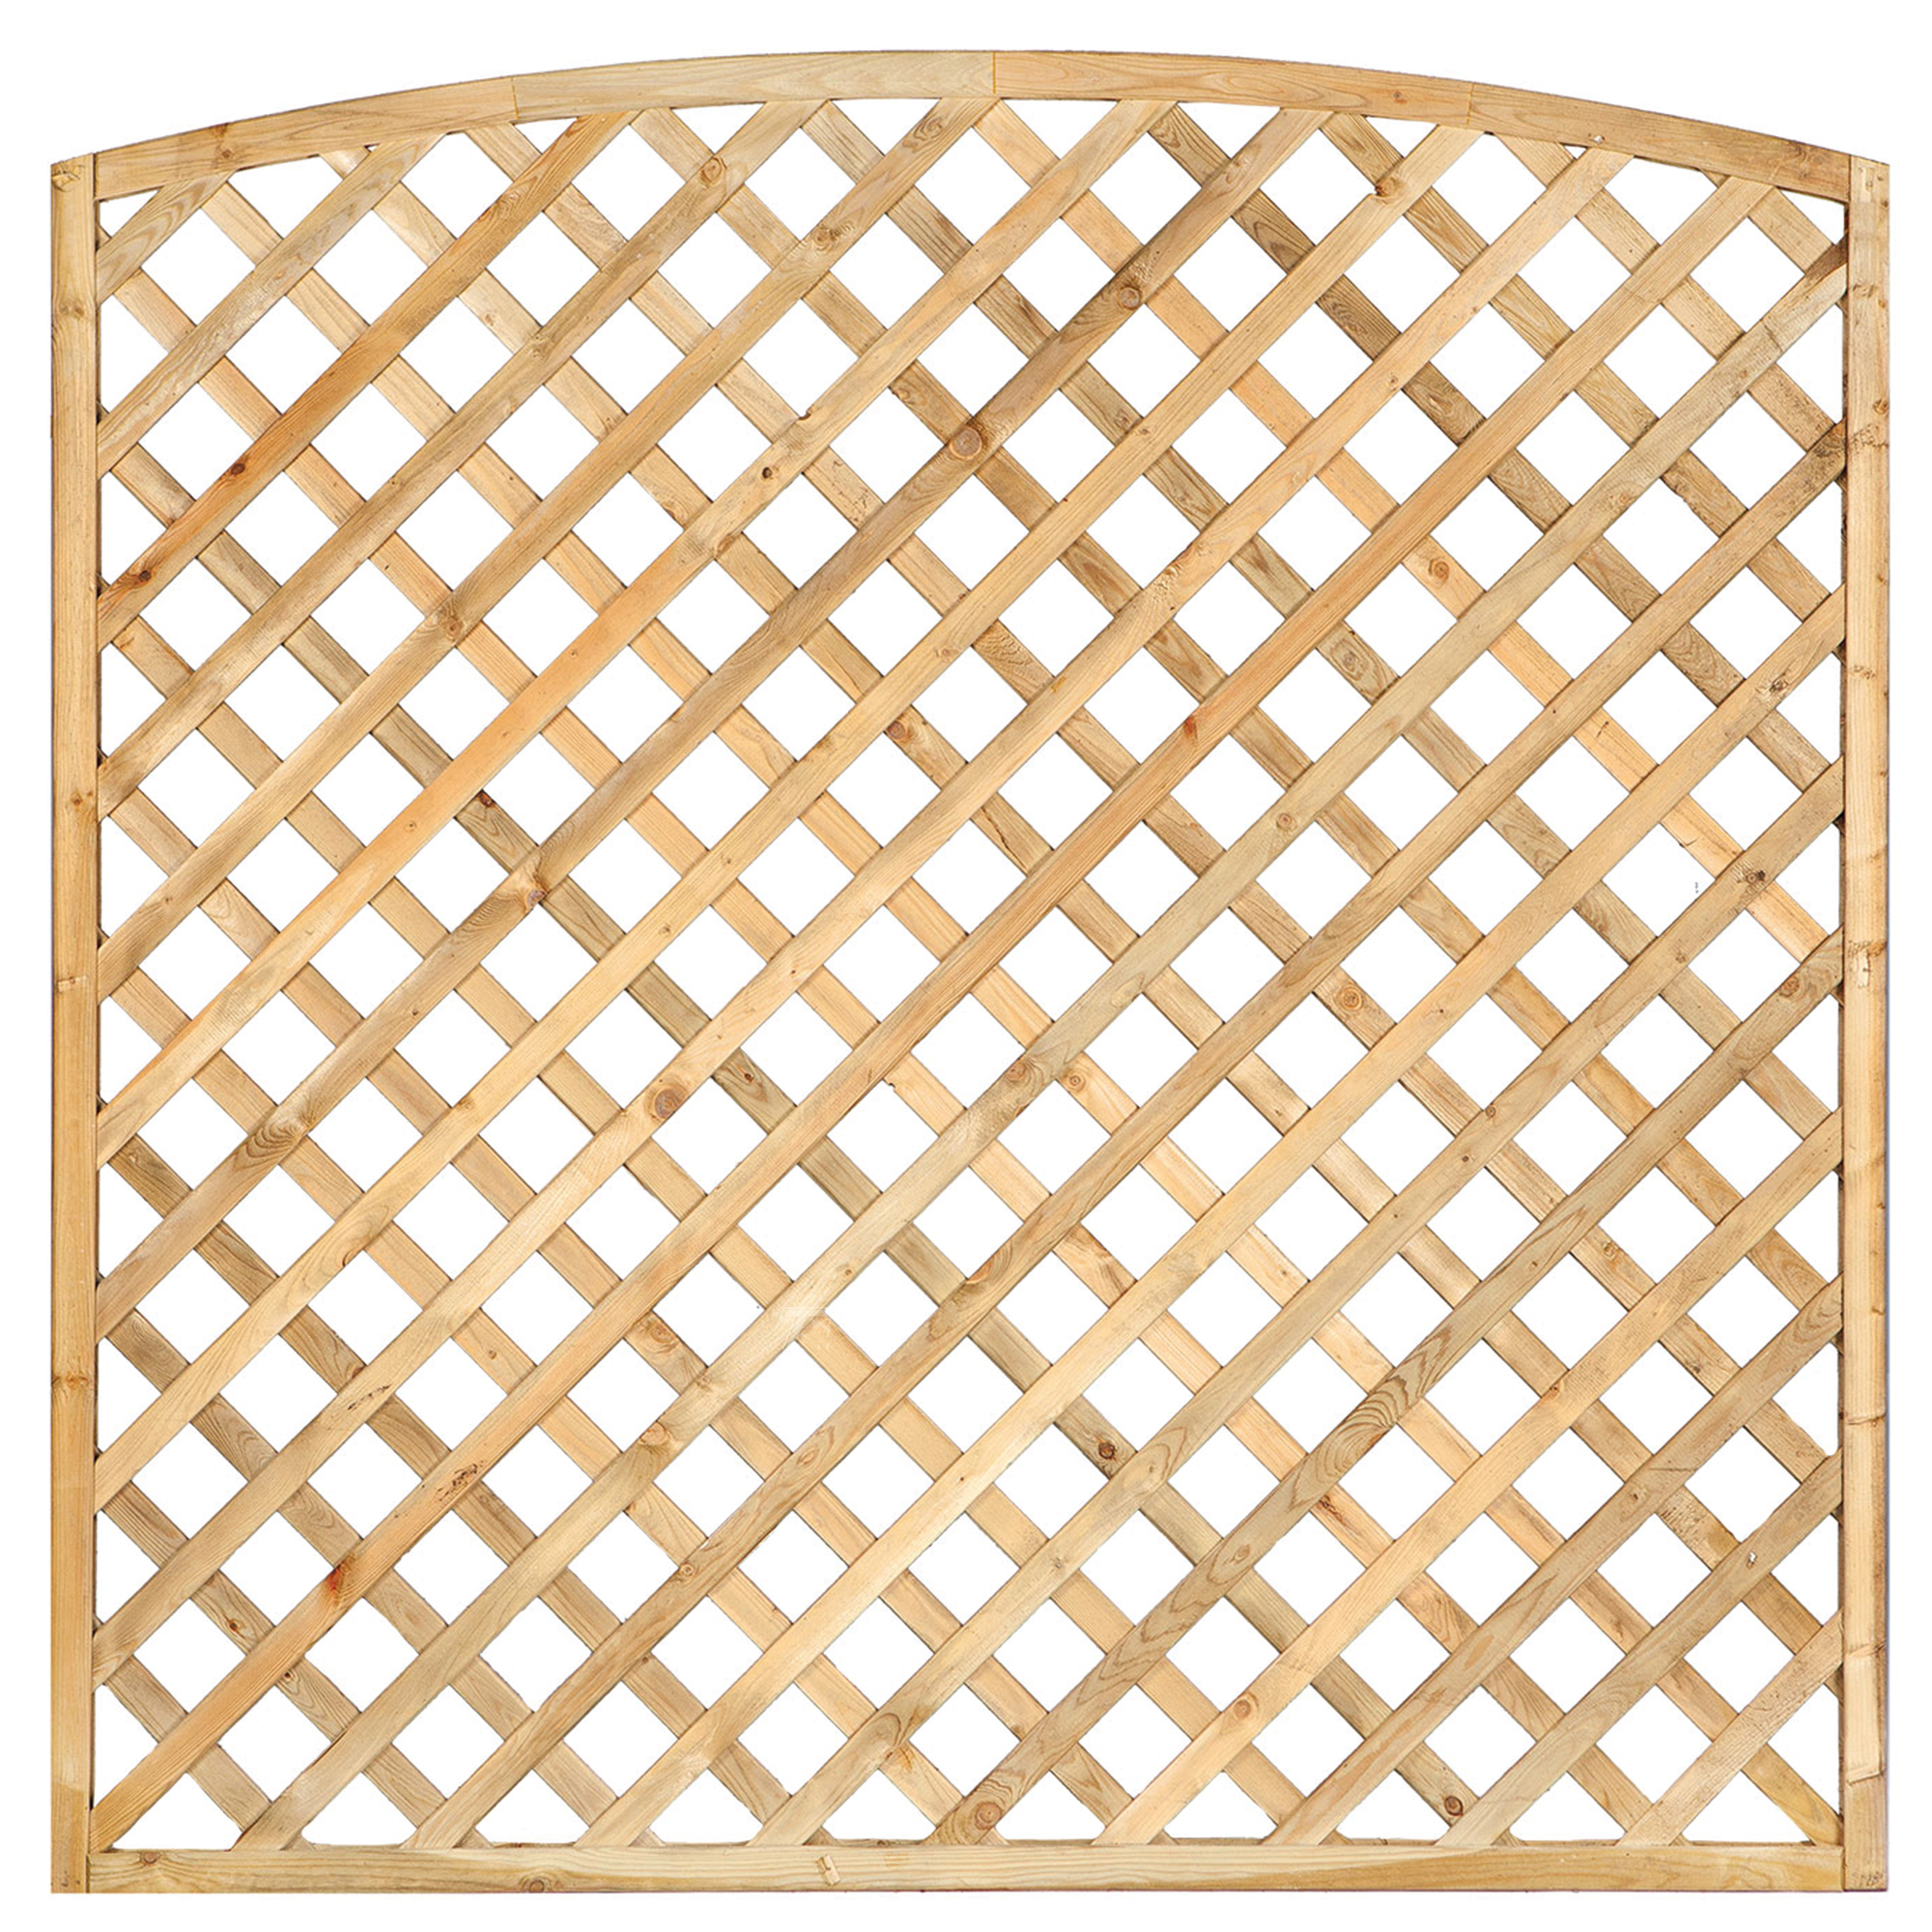 Spalier diagonal mit gebogenem Rahmen, H 60 cm